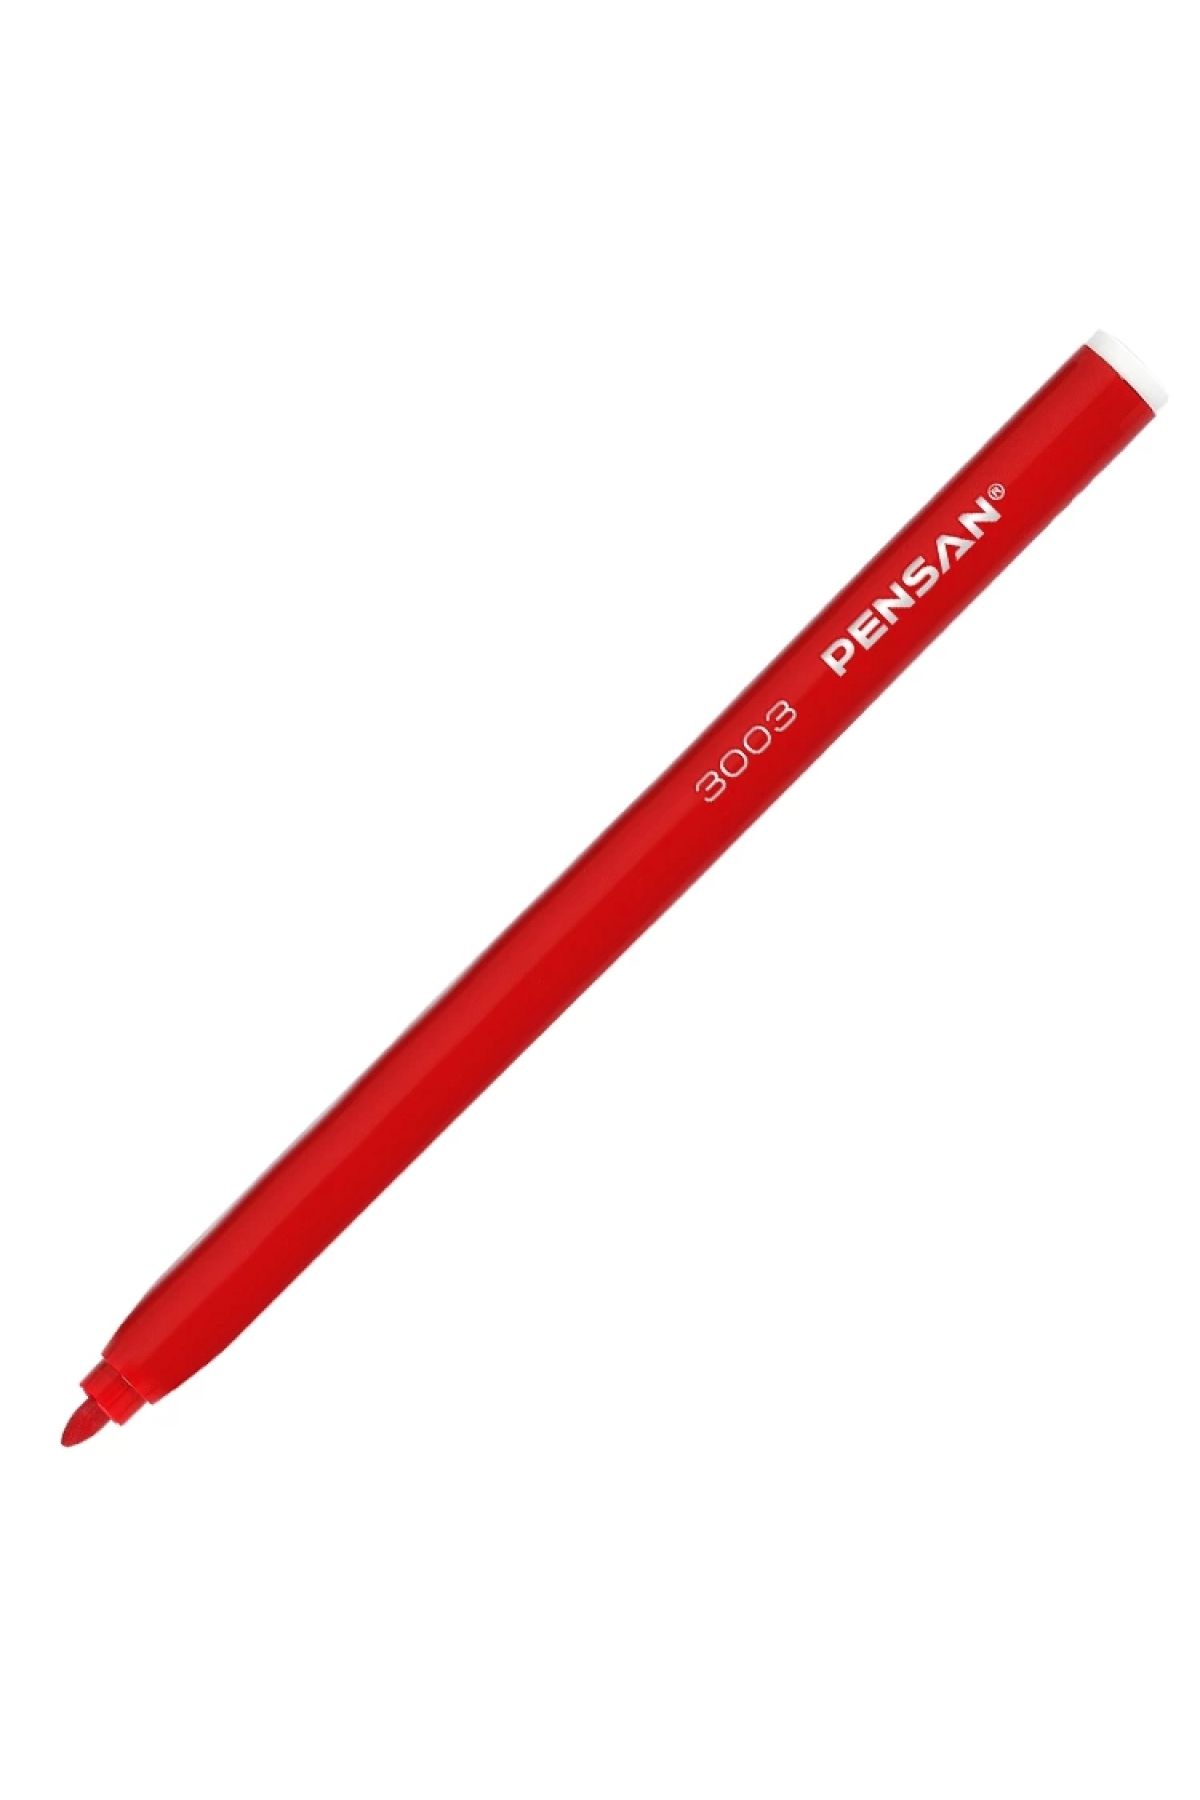 Pensan 3003 Ofis Tipi Keçeli Kalem Kırmızı